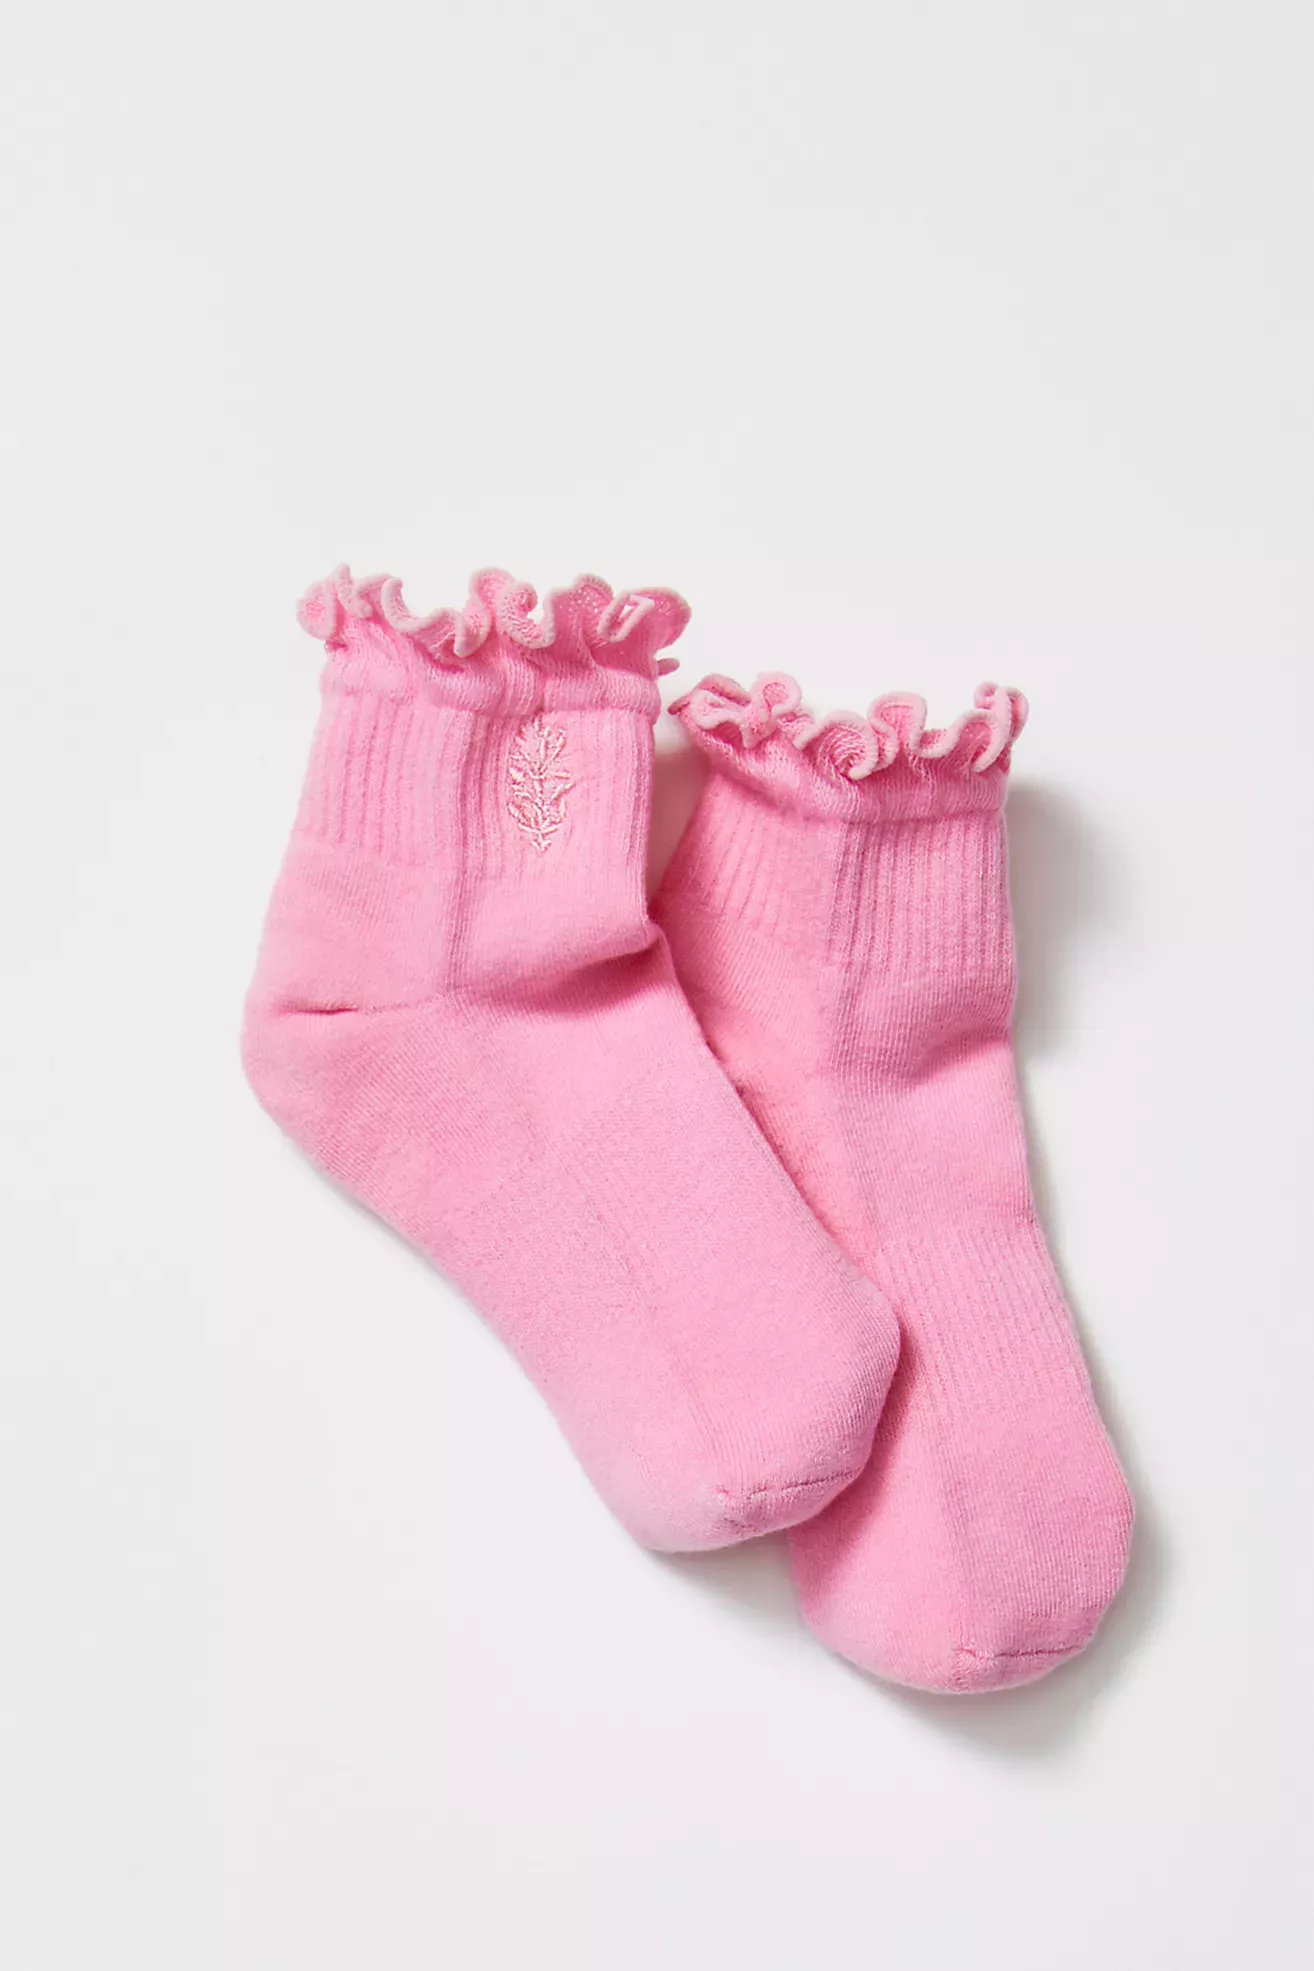 Baby socks - Free people icons